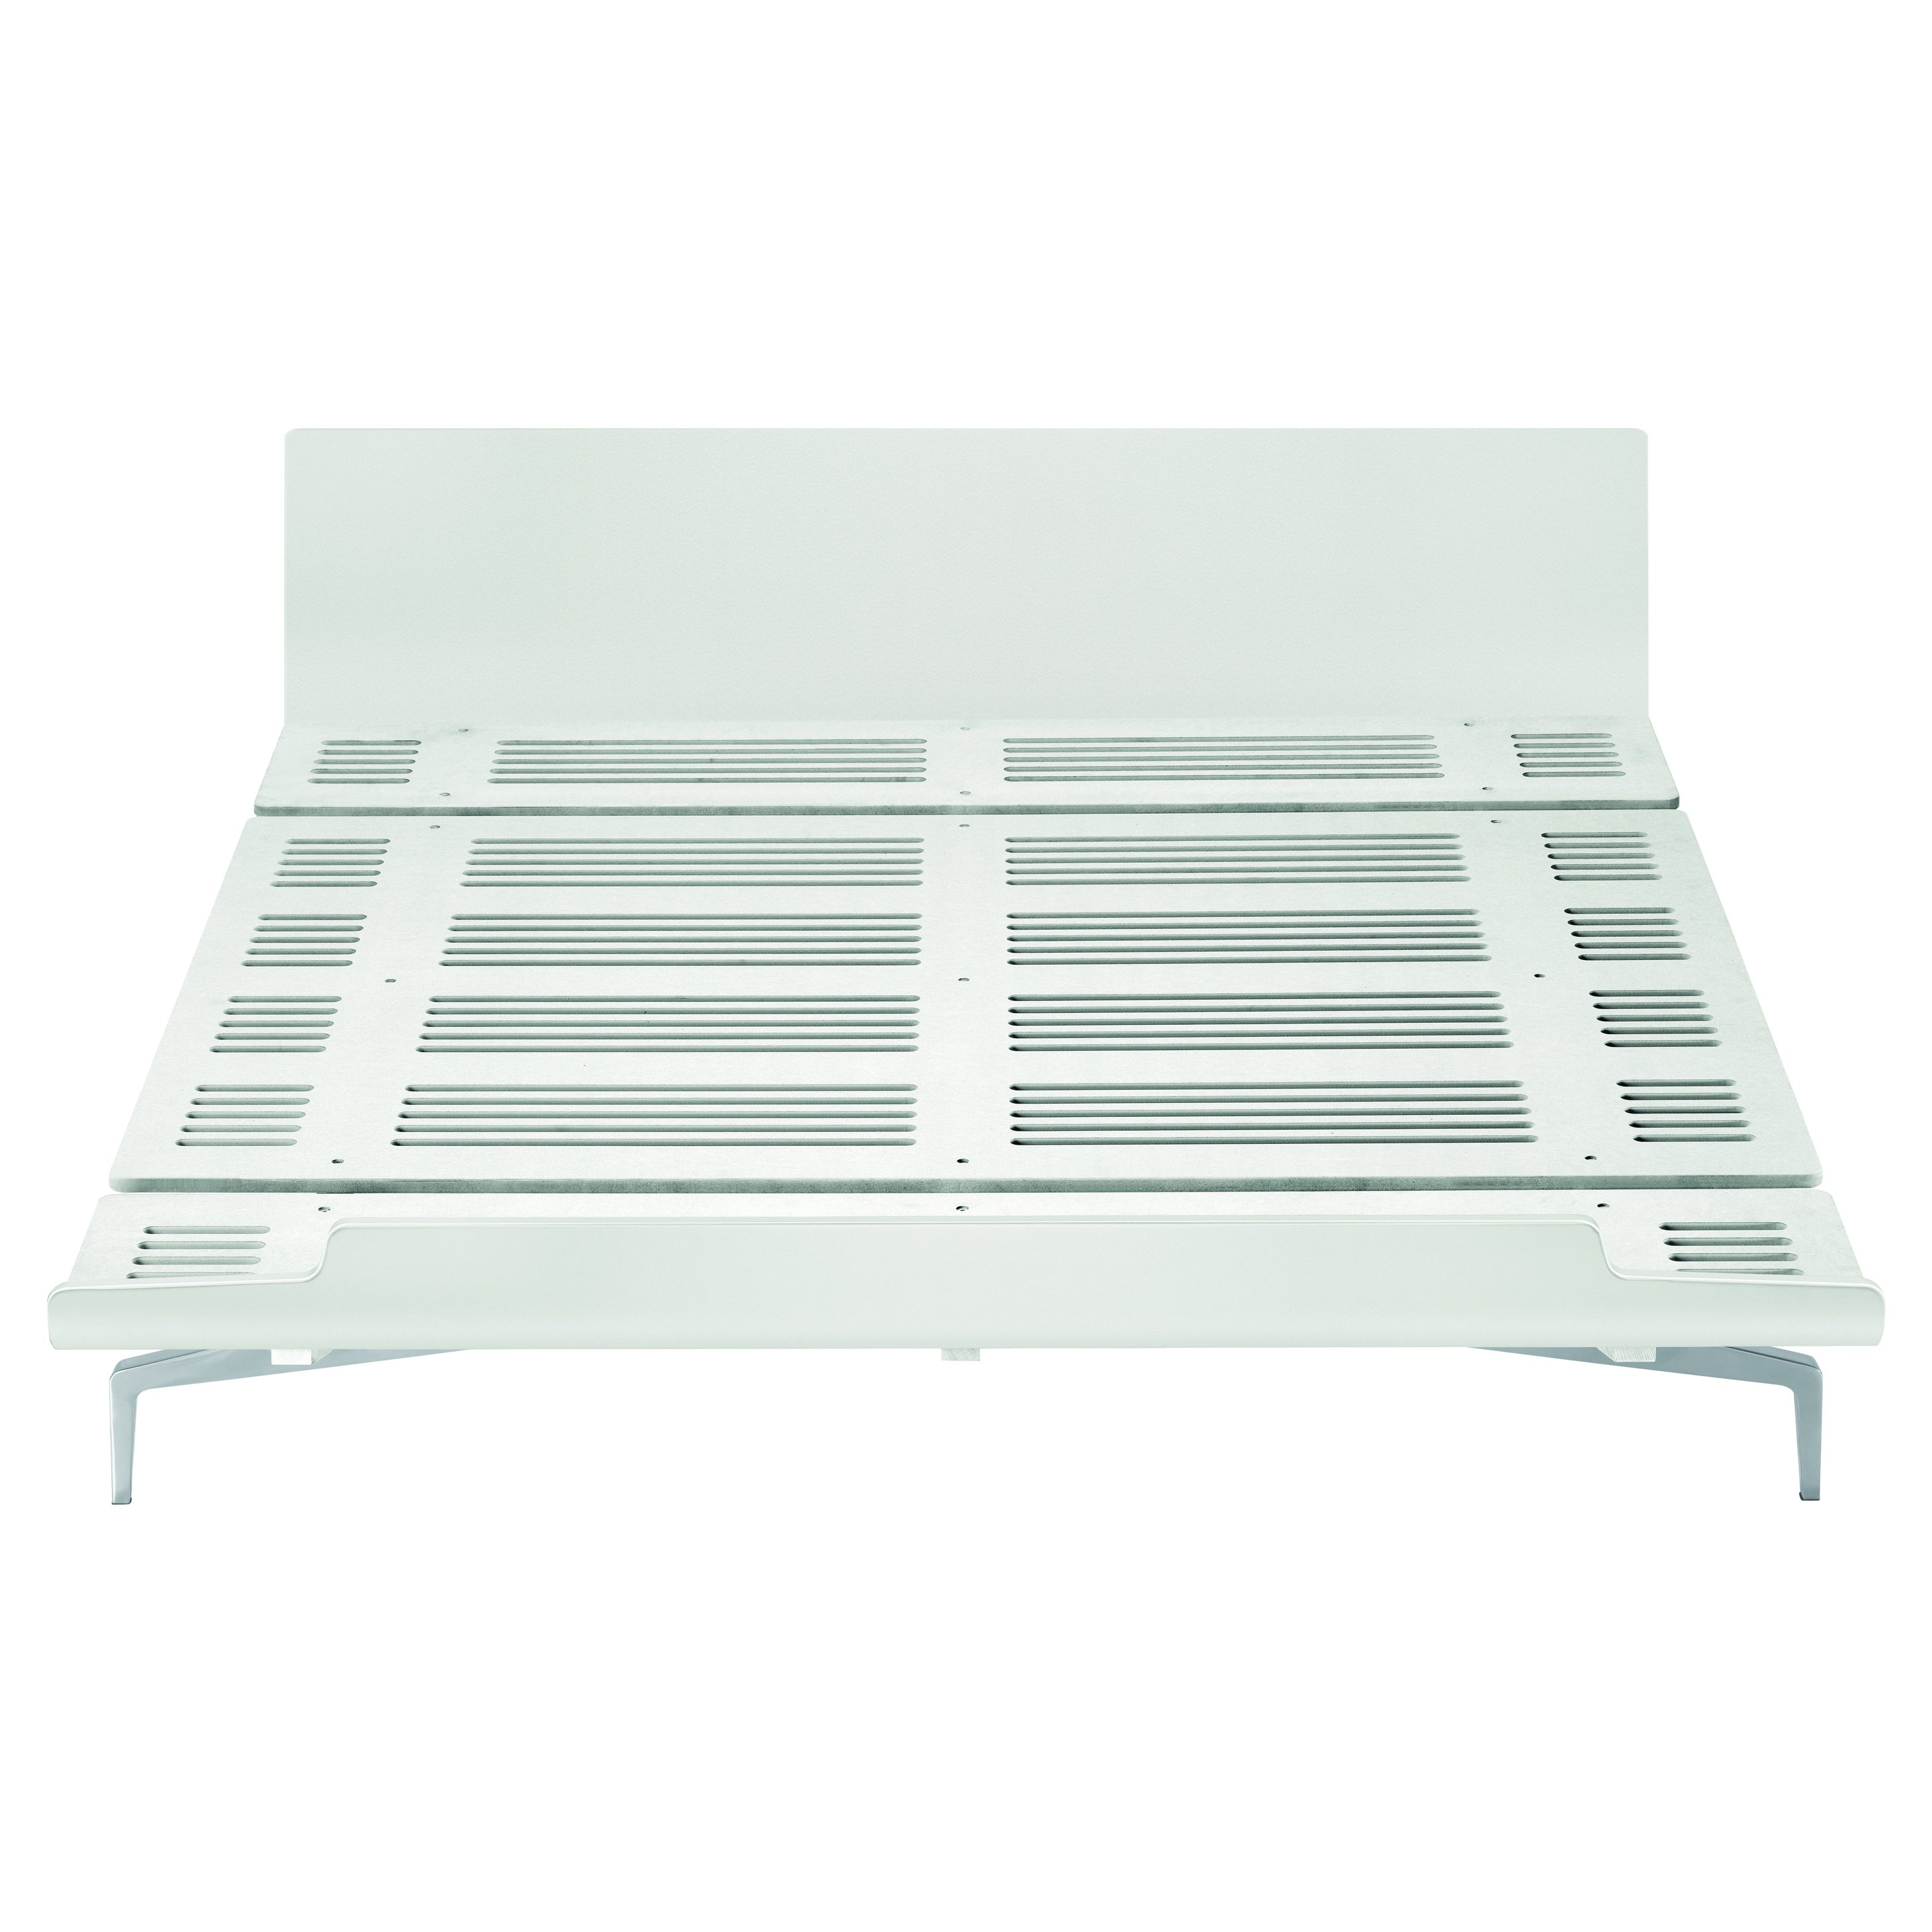 Alias LL4 Legnoletto Bed in White Matt Lacquer with Polished Aluminum Legs